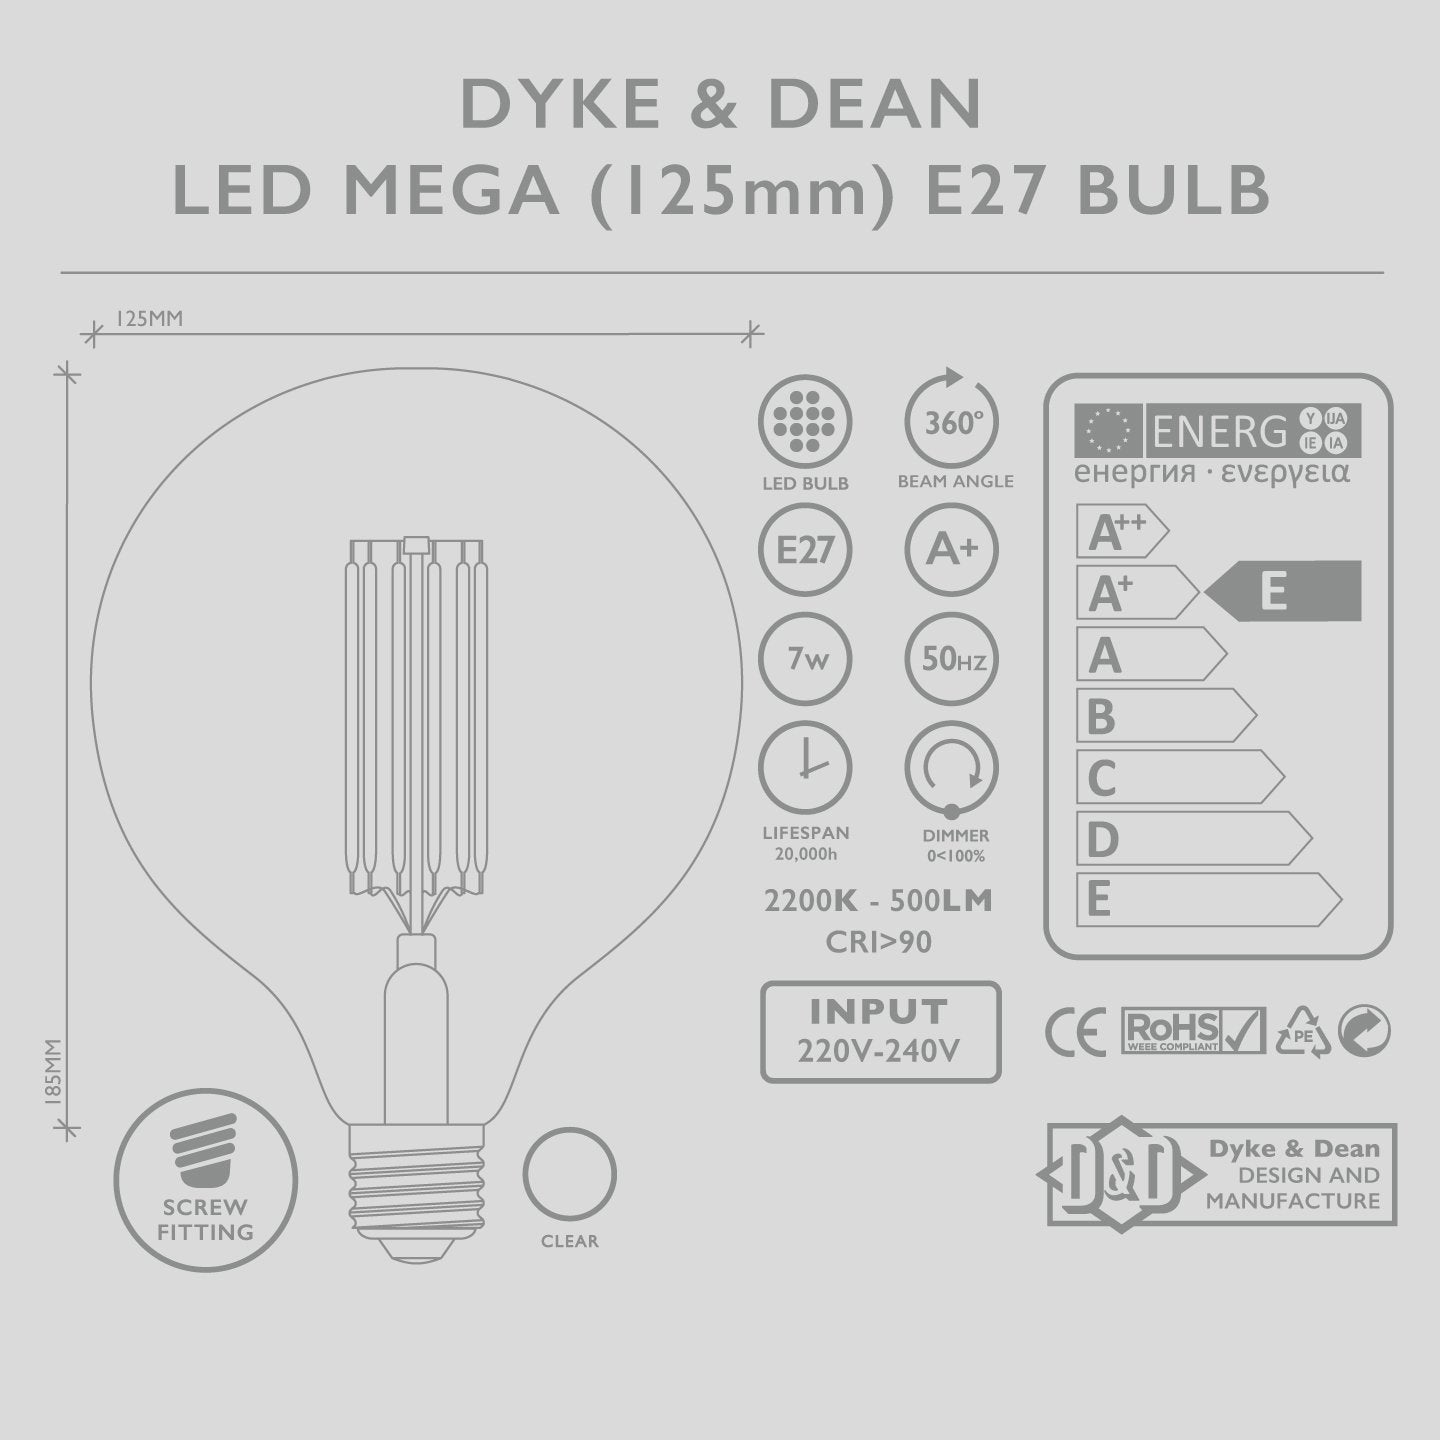 DYKE & DEAN LED MEGA EDISON 125MM E27 BULB - DYKE & DEAN